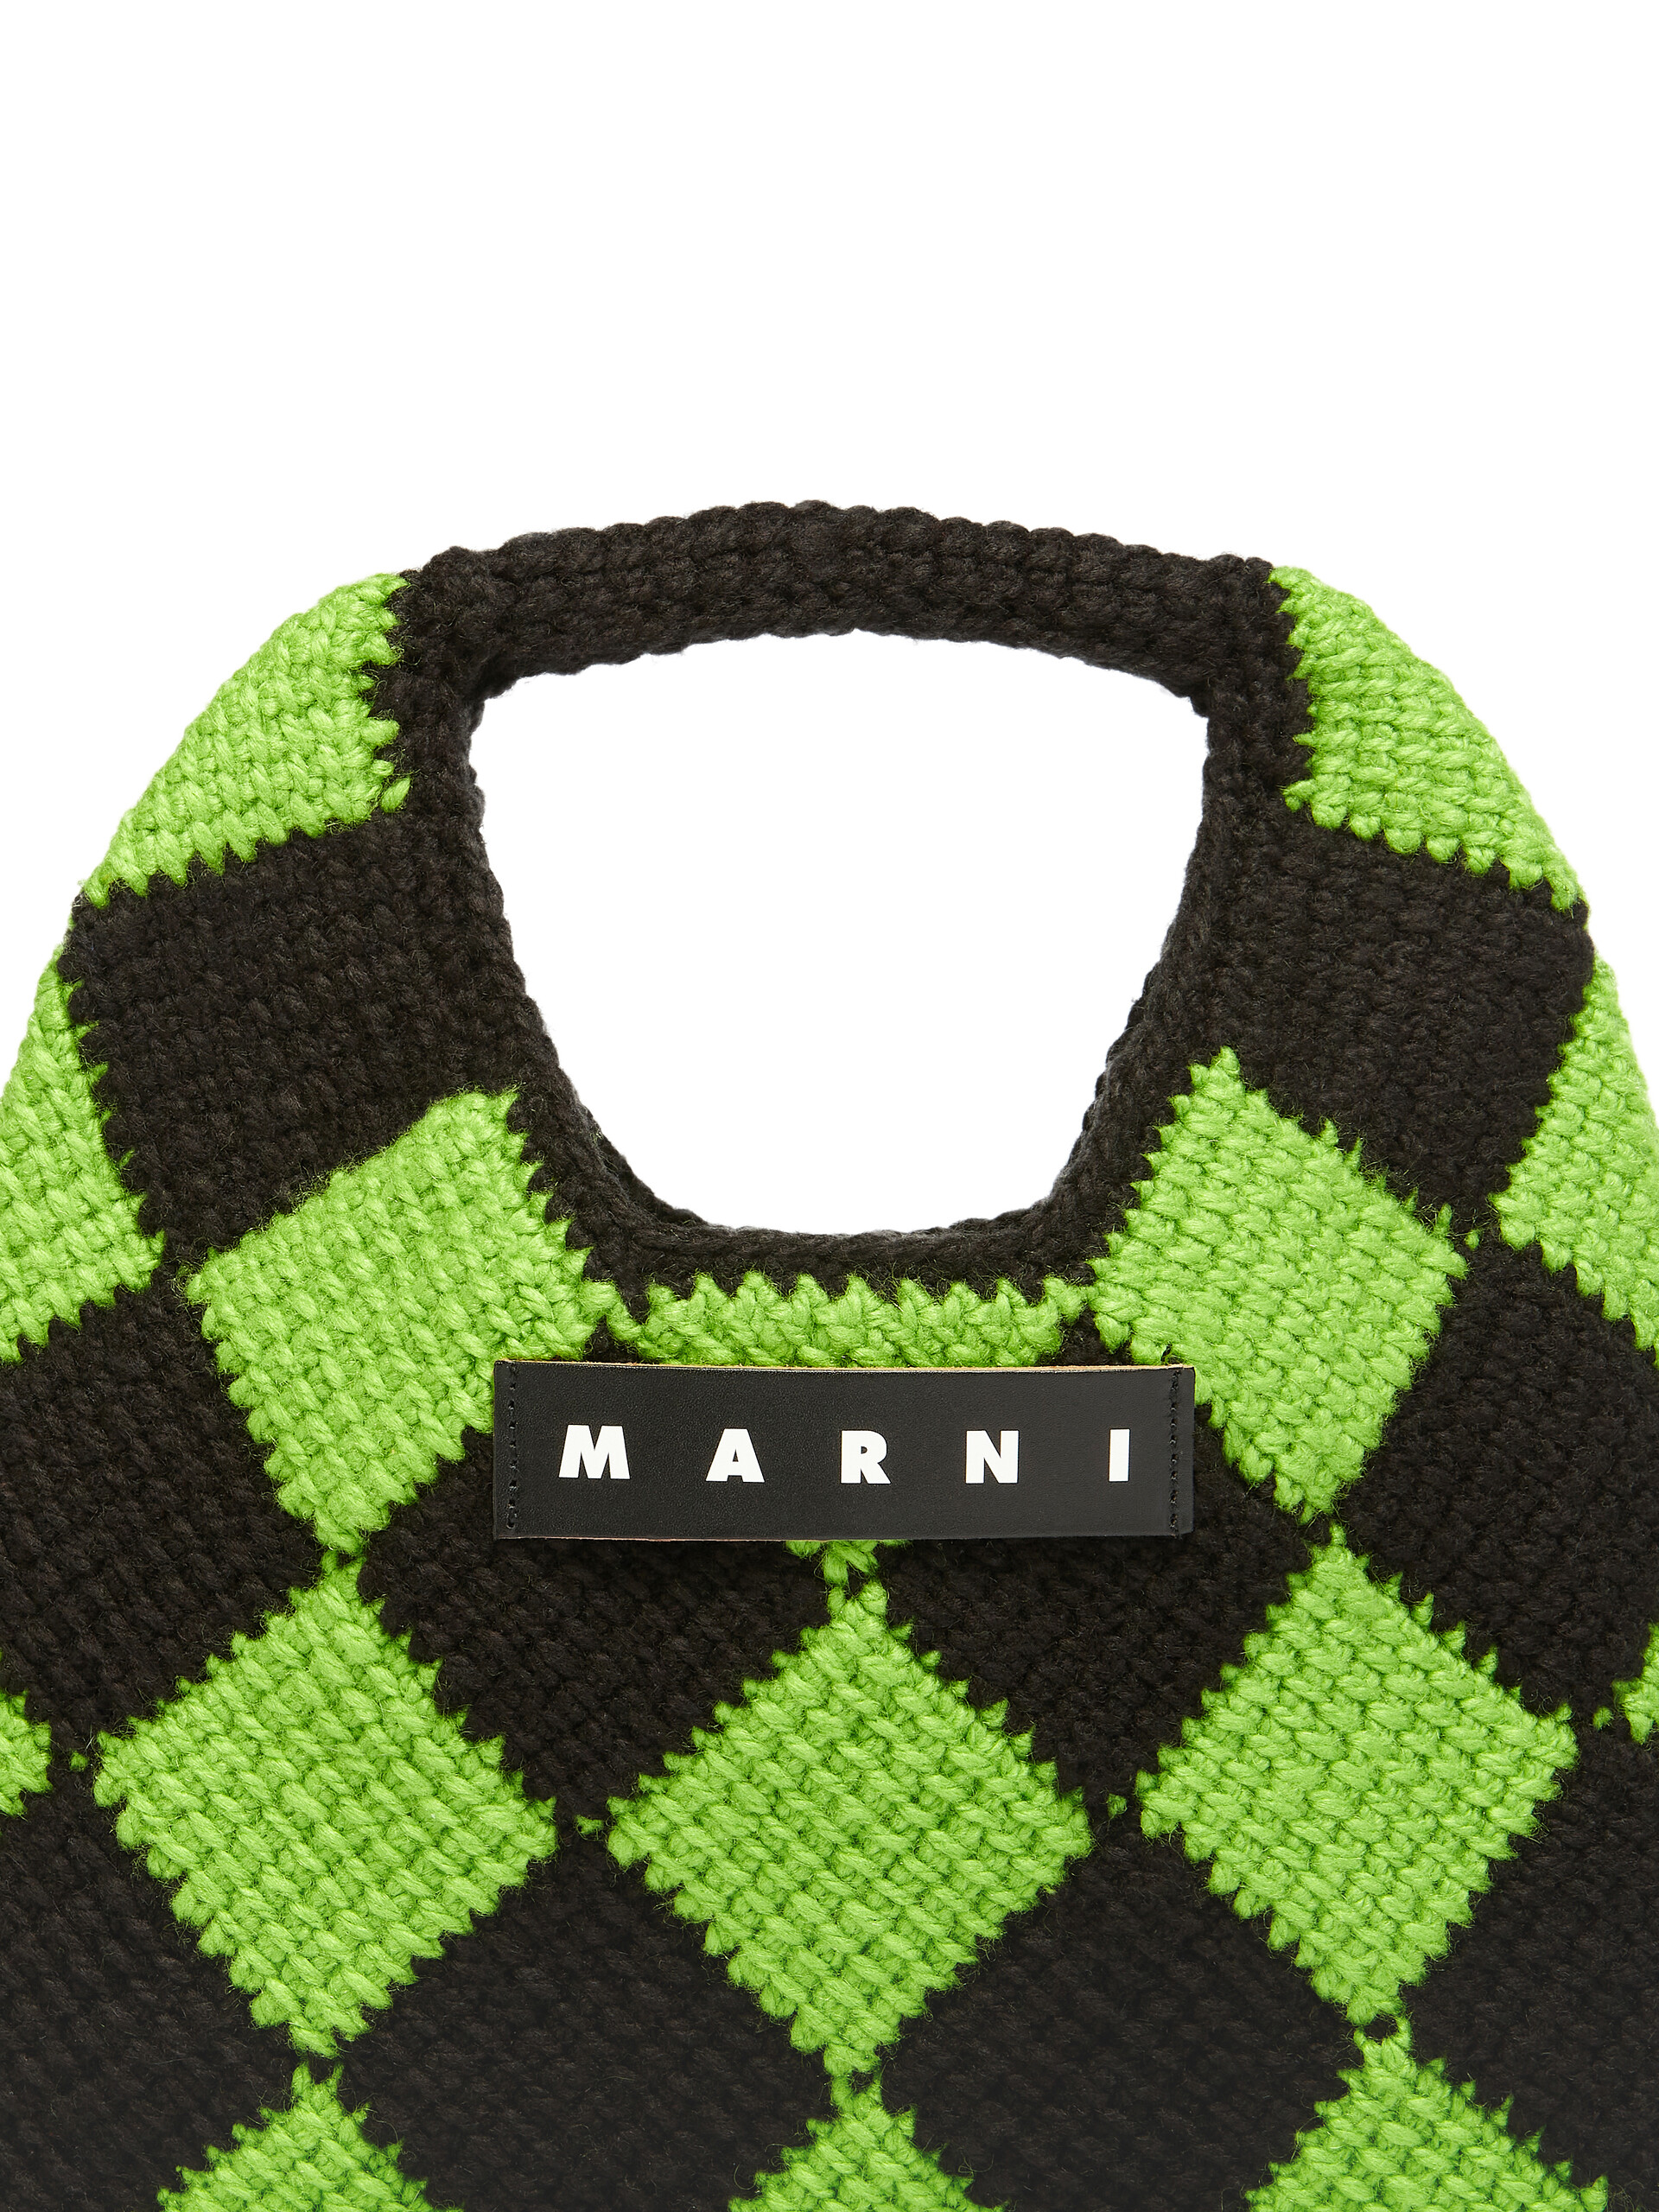 MARNI MARKET DIAMOND small bag in green and black tech wool - Bags - Image 4